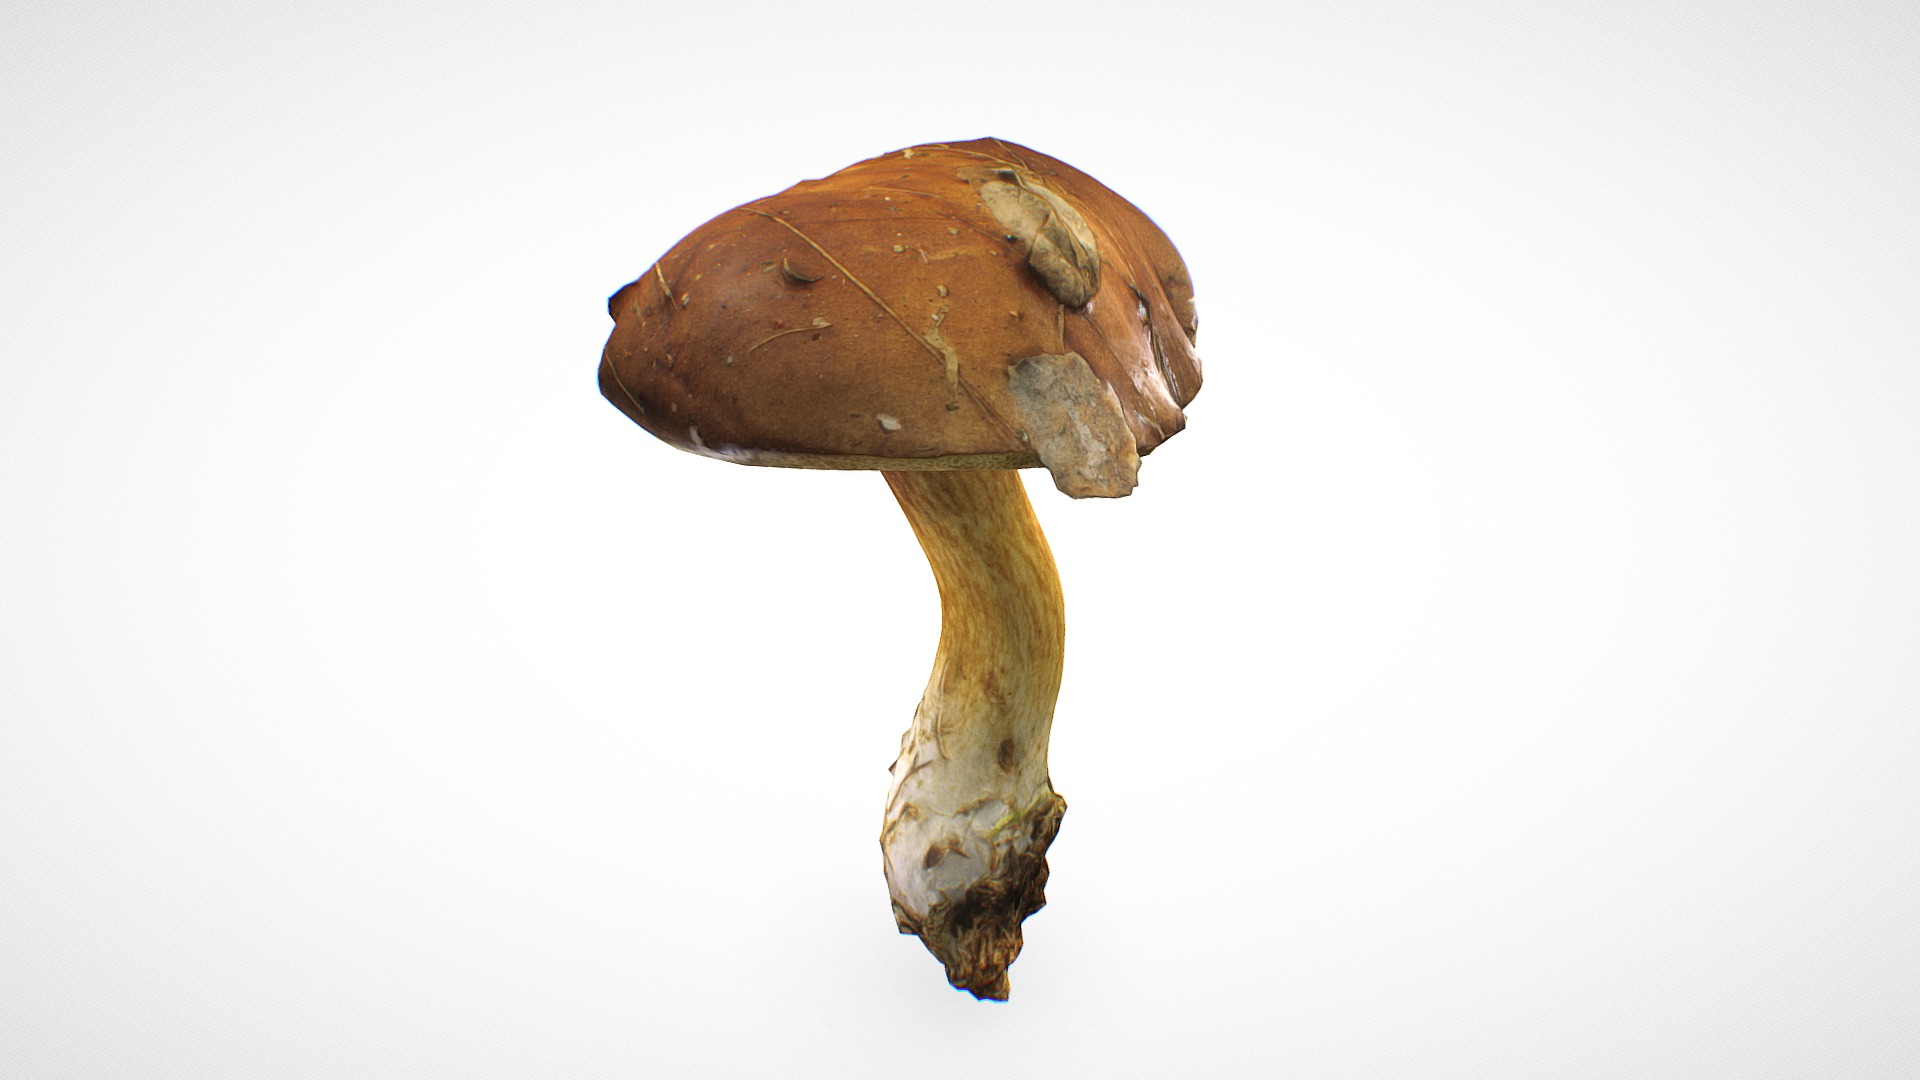 3D model Xerocomus mushroom 12 – retopo 8K PBR - This is a 3D model of the Xerocomus mushroom 12 - retopo 8K PBR. The 3D model is about a mushroom with a white background.